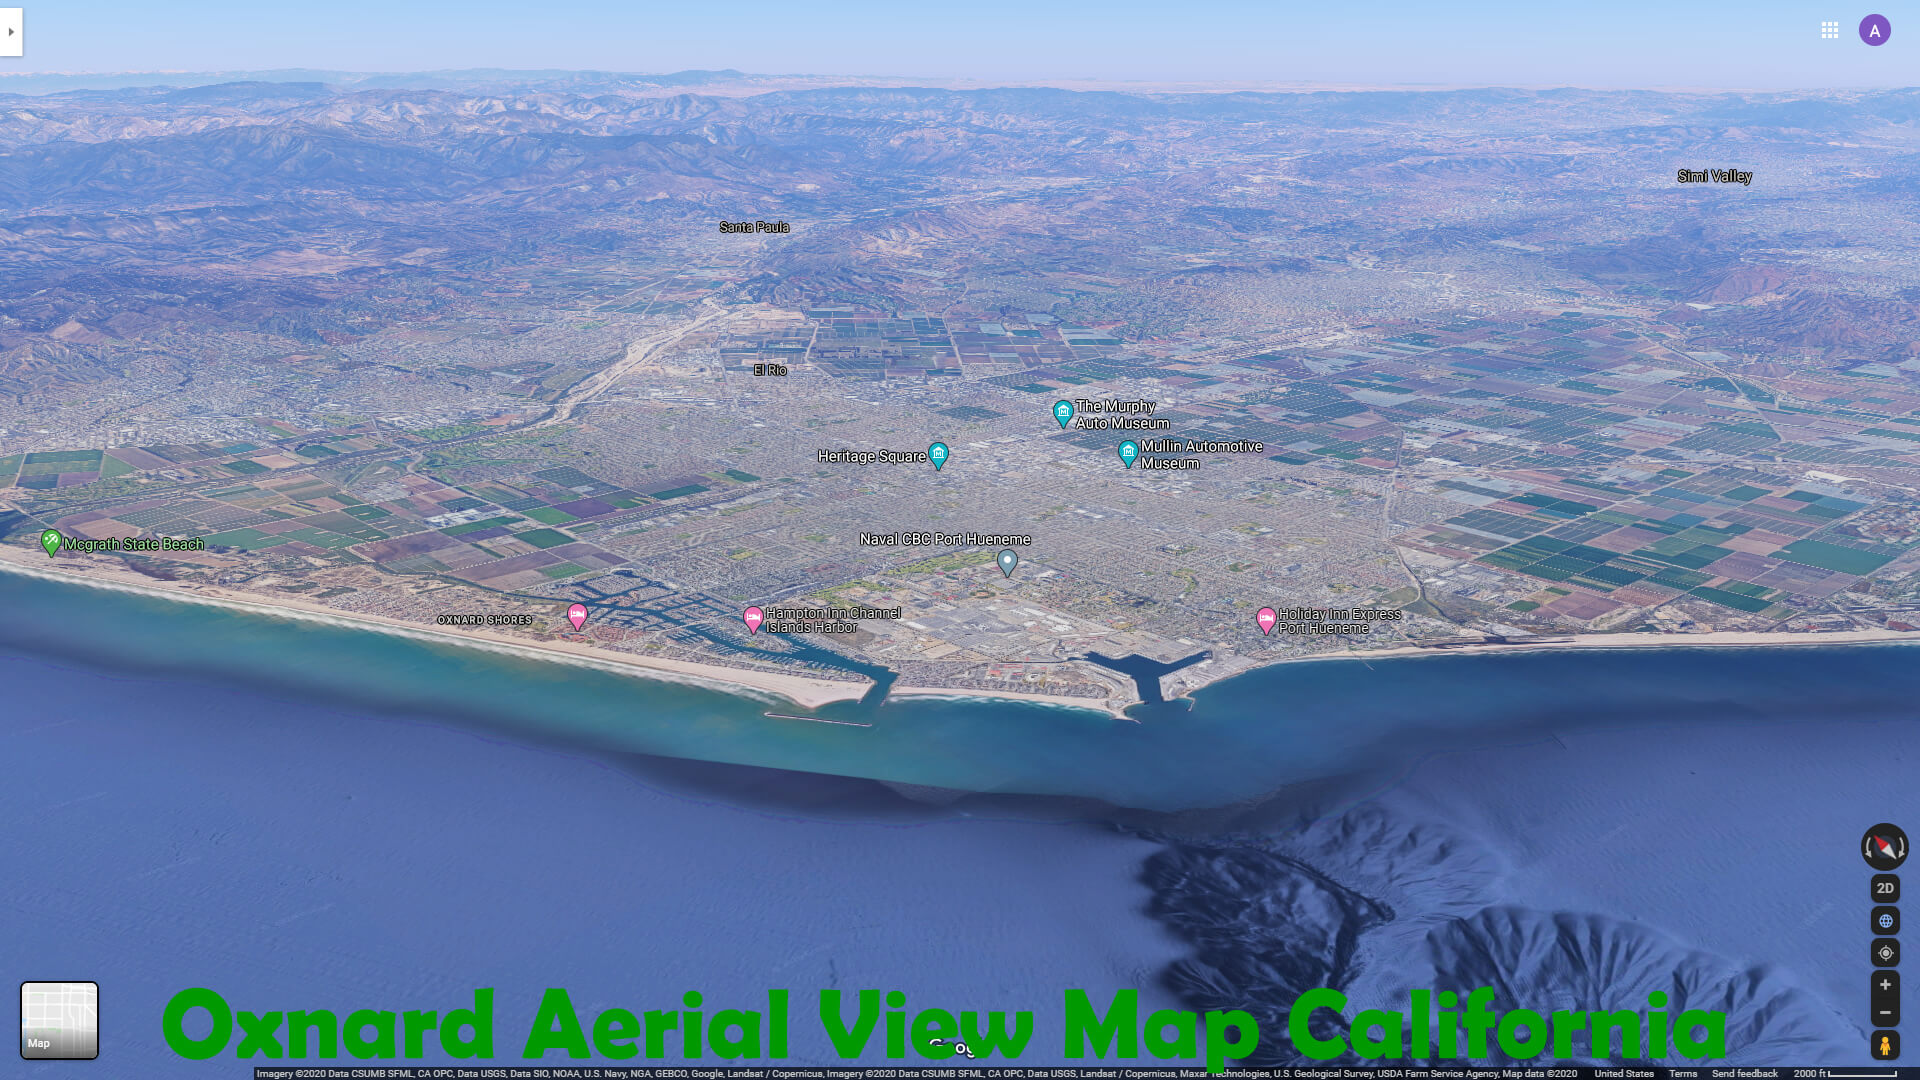 Oxnard Aerial View Map California